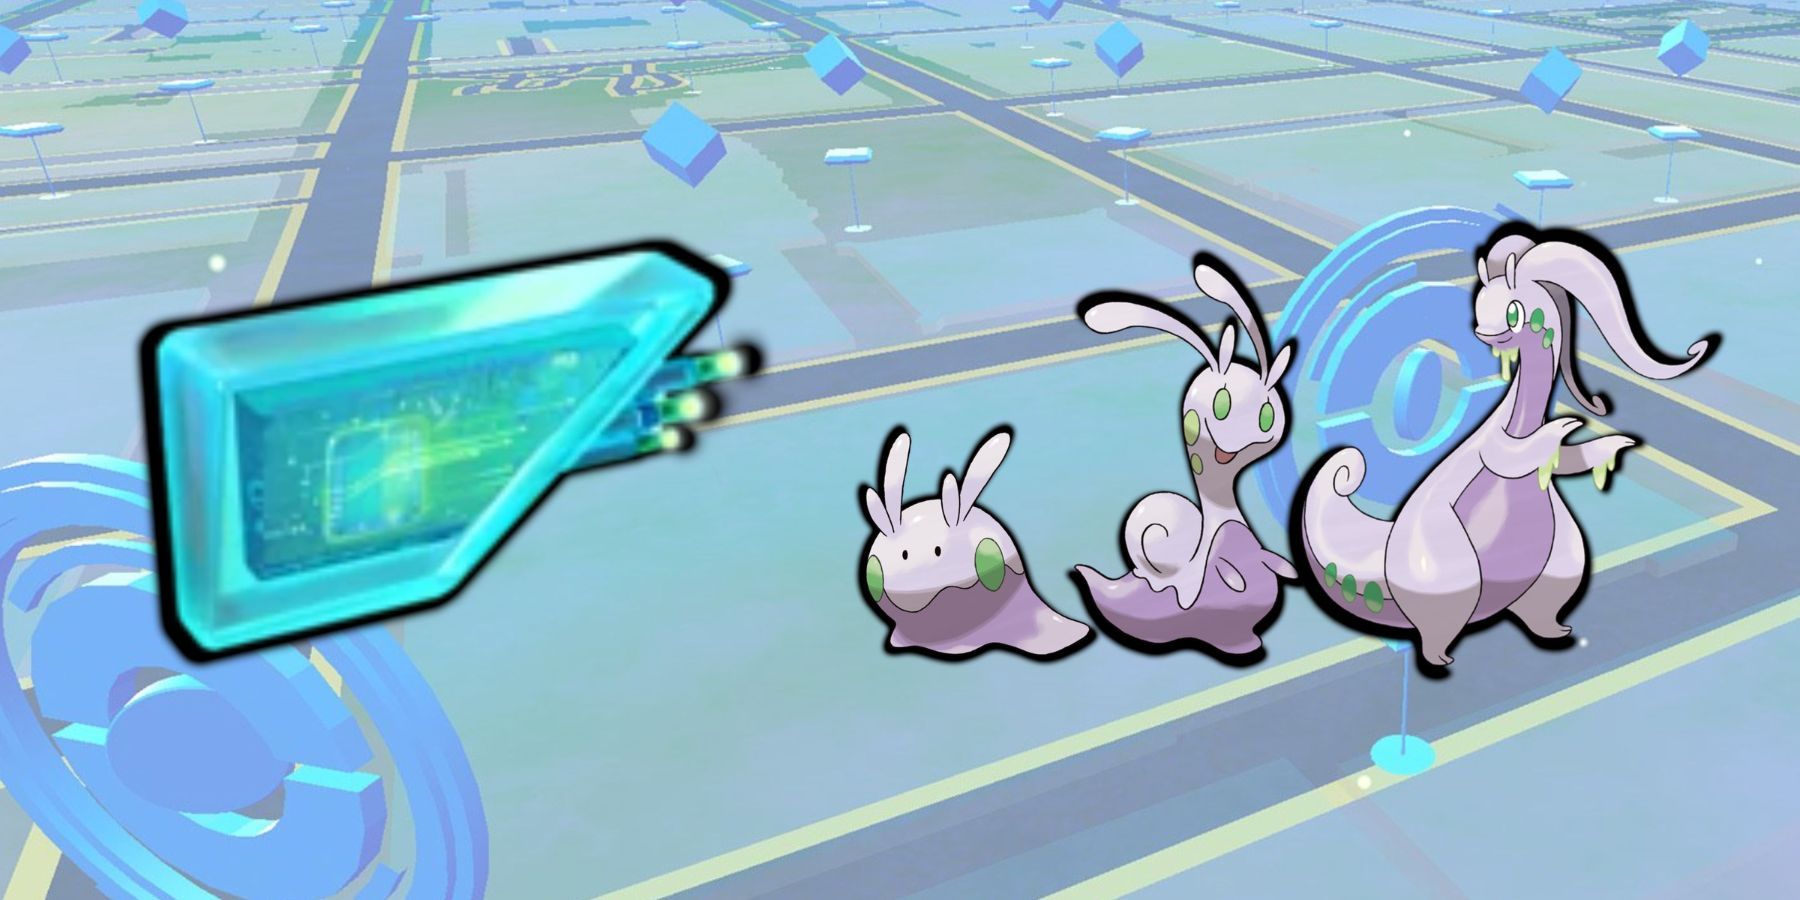 image showing goodra sliggoo and goomy in pokemon go.